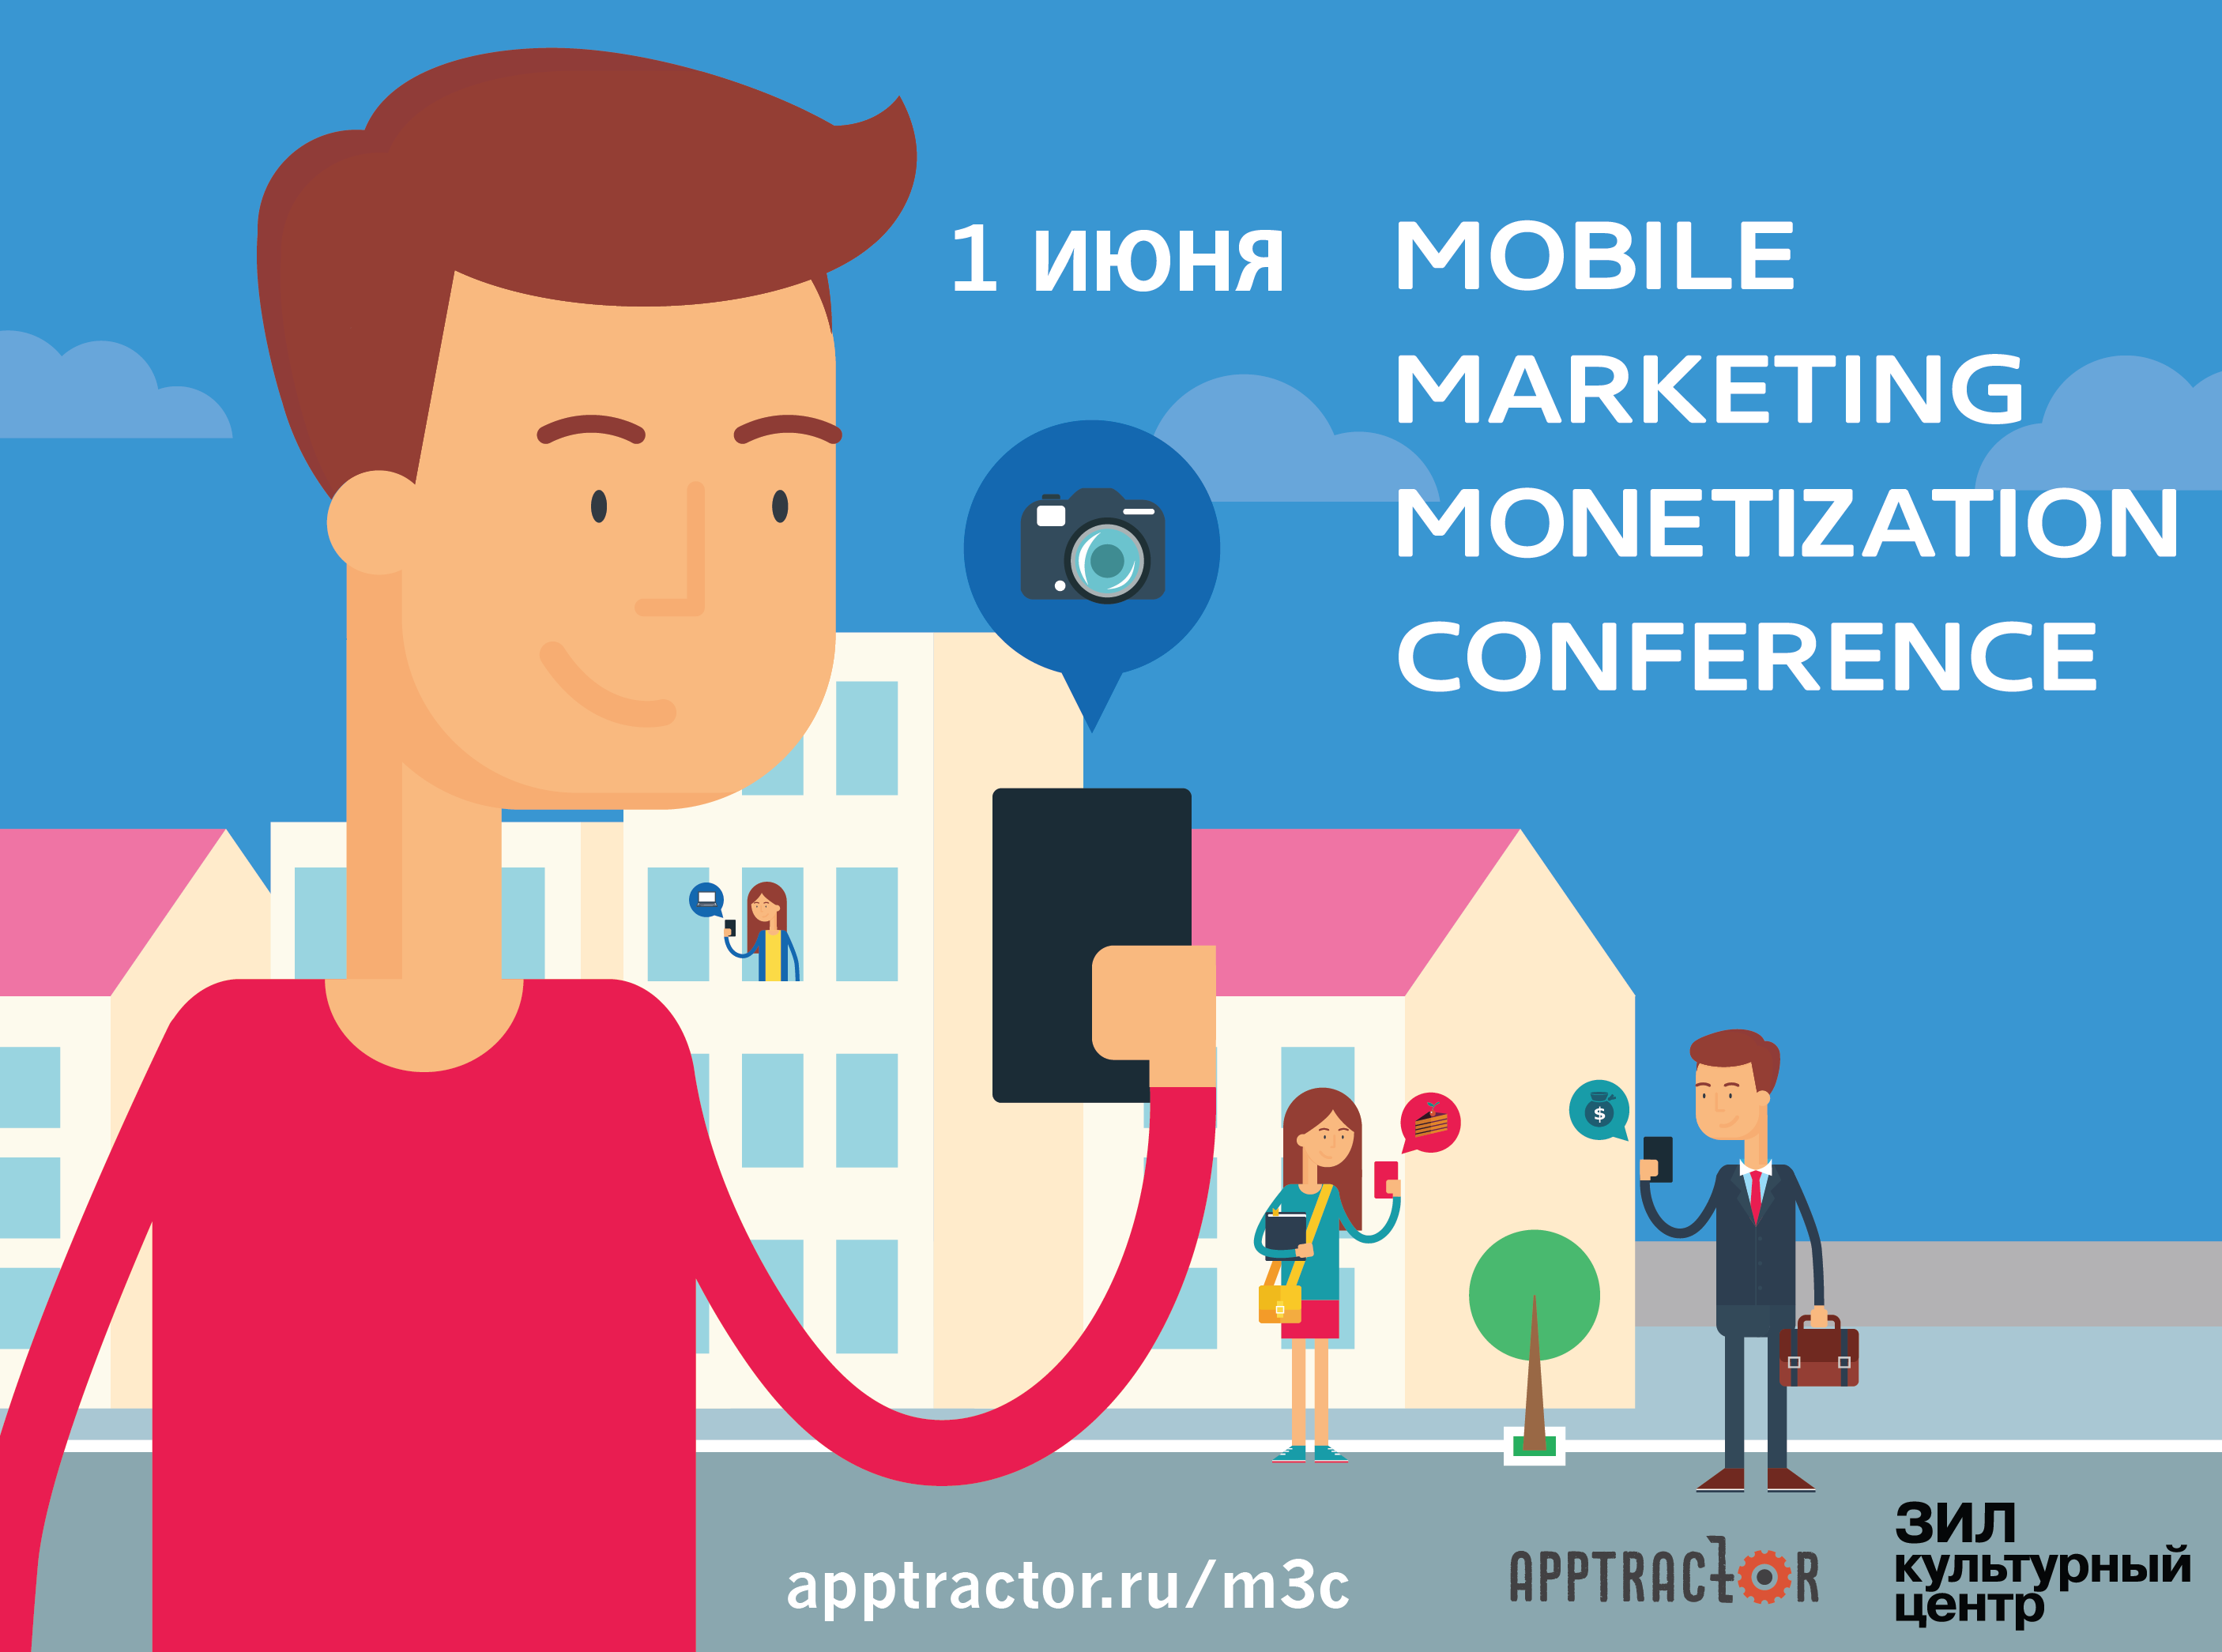 Картинка 1 июня — Mobile Marketing & Monetization Conference